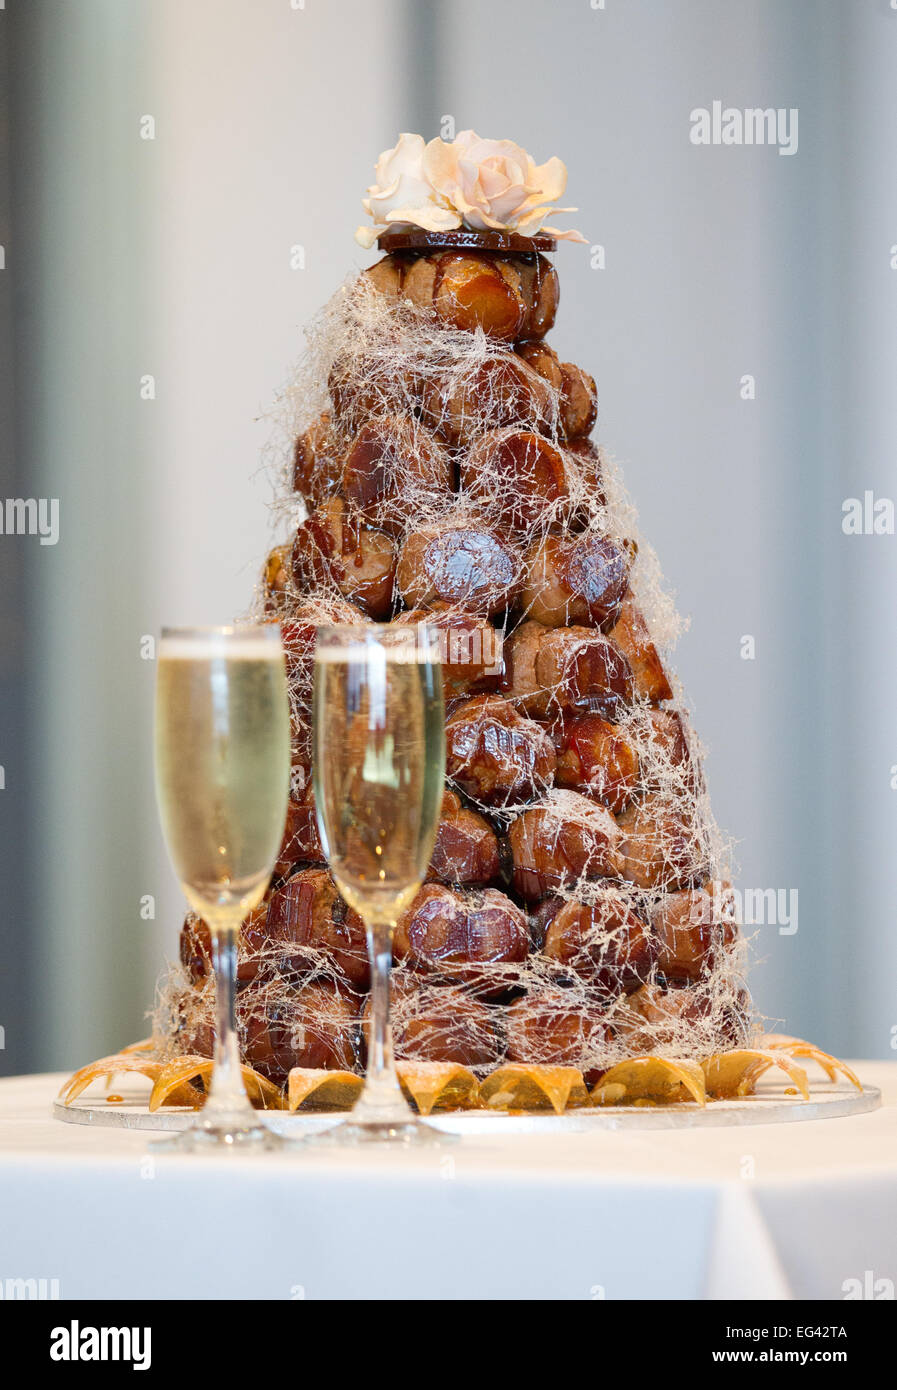 Croquembouche dessert as a wedding cake Stock Photo